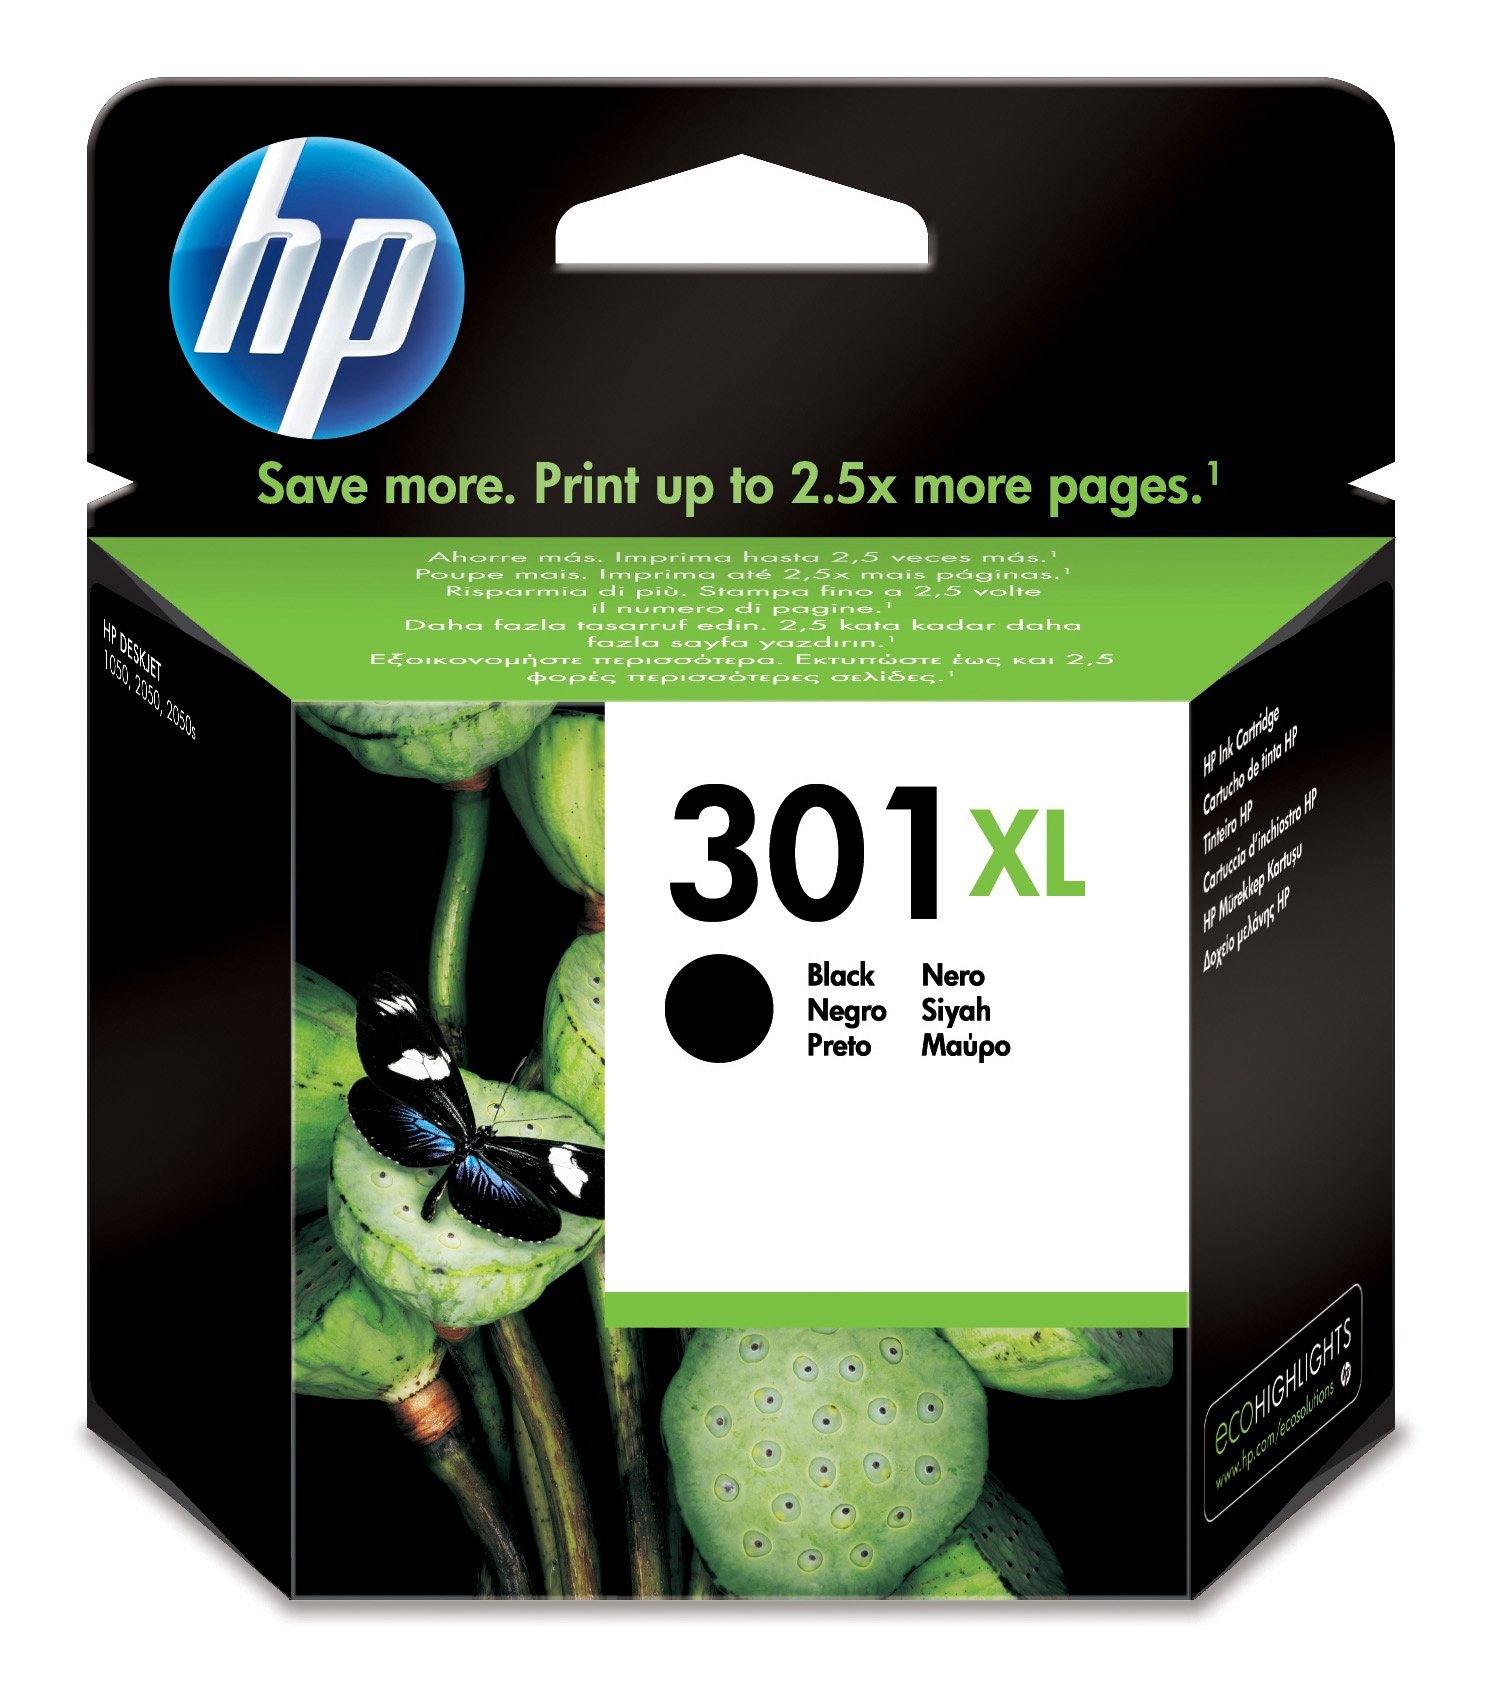 HP INK CARTRIDGE 301XL BLACK - Tintenpatrone (Schwarz)